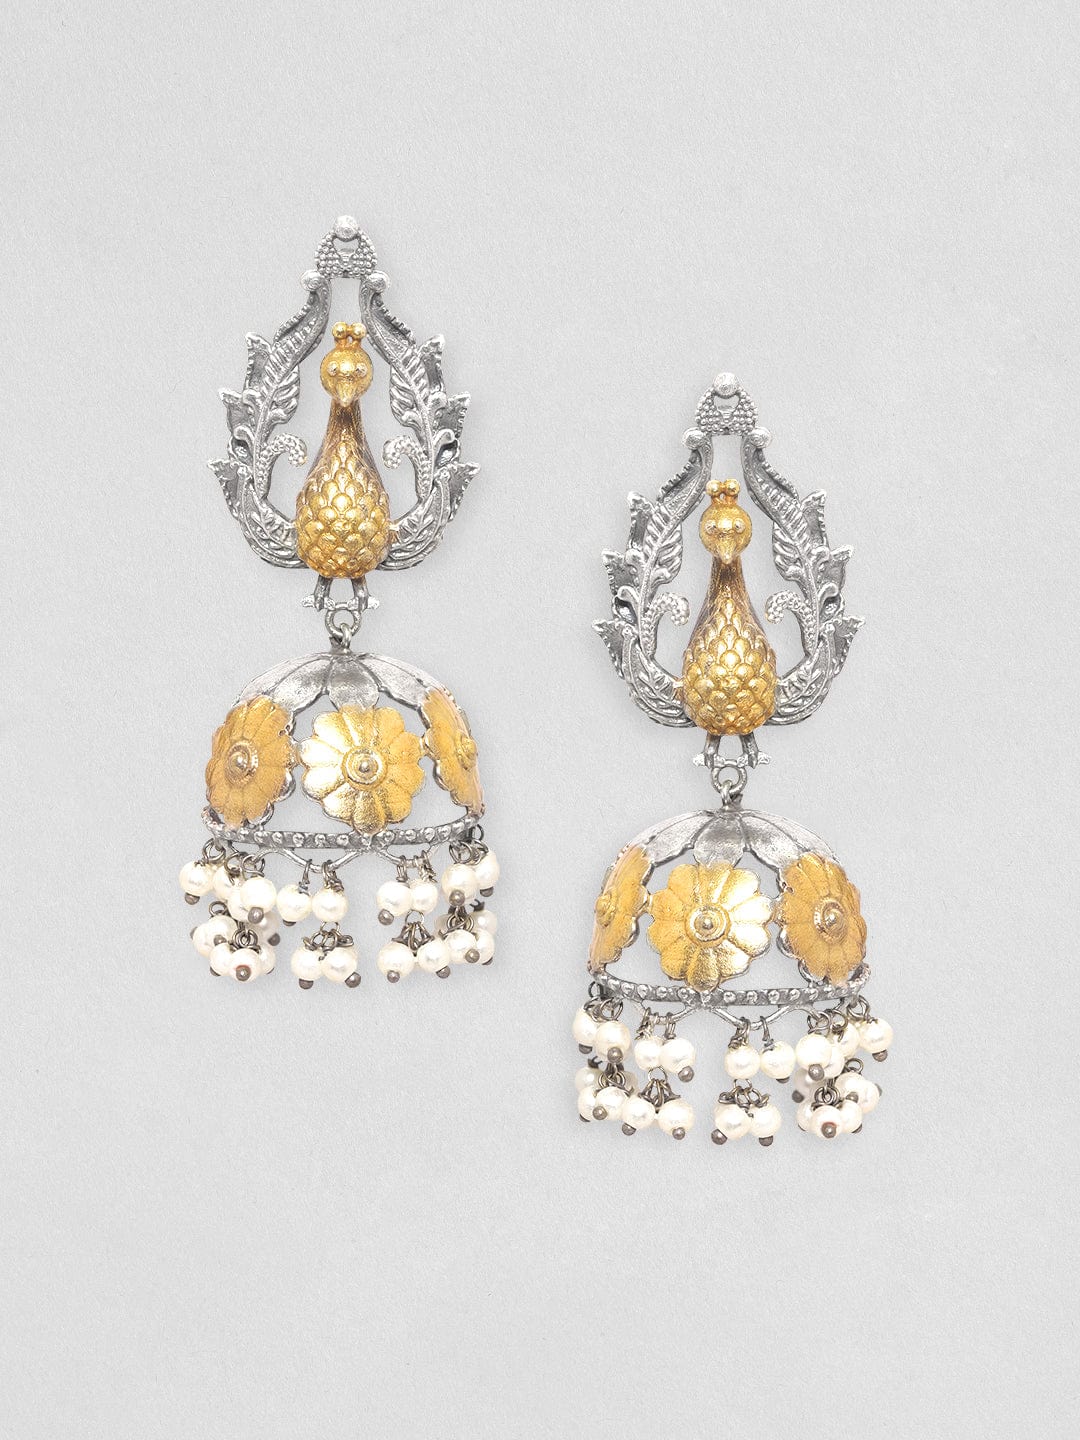 Oxidised Gold Earrings  Oxidized Metal Earrings  Circle earring  Saaj